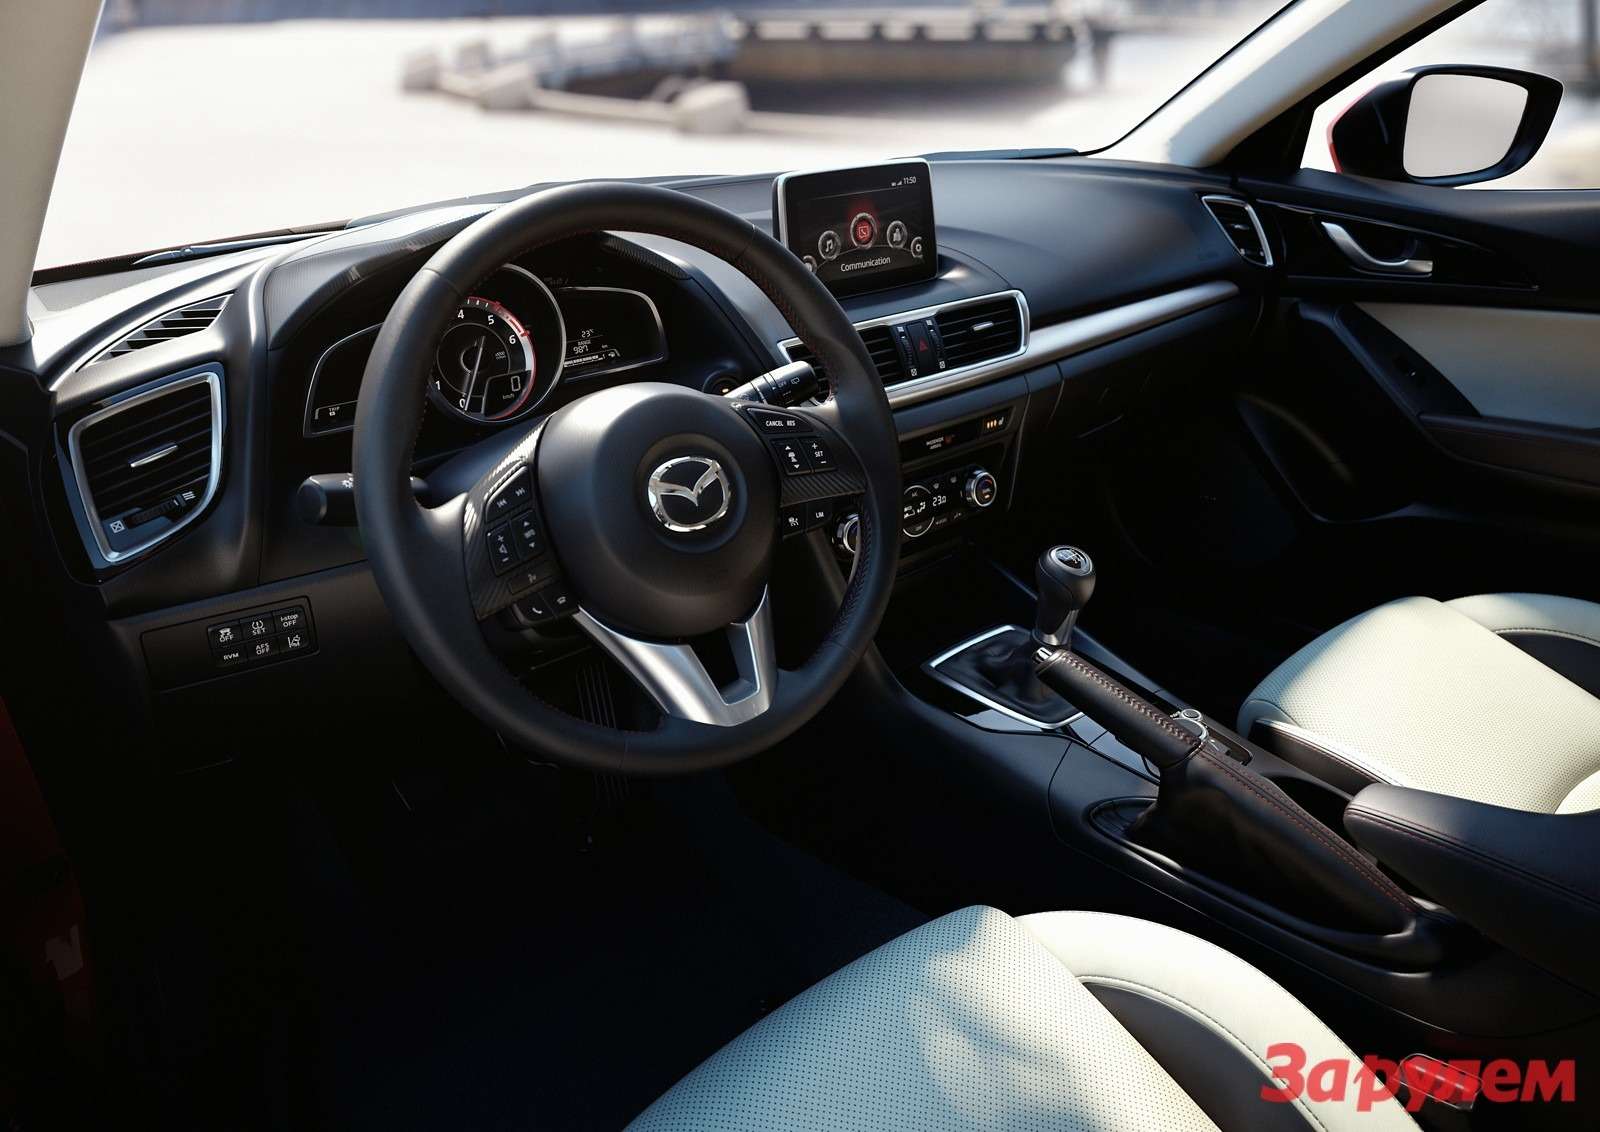 Mazda3 Hatchback 2013 interior 01 copy